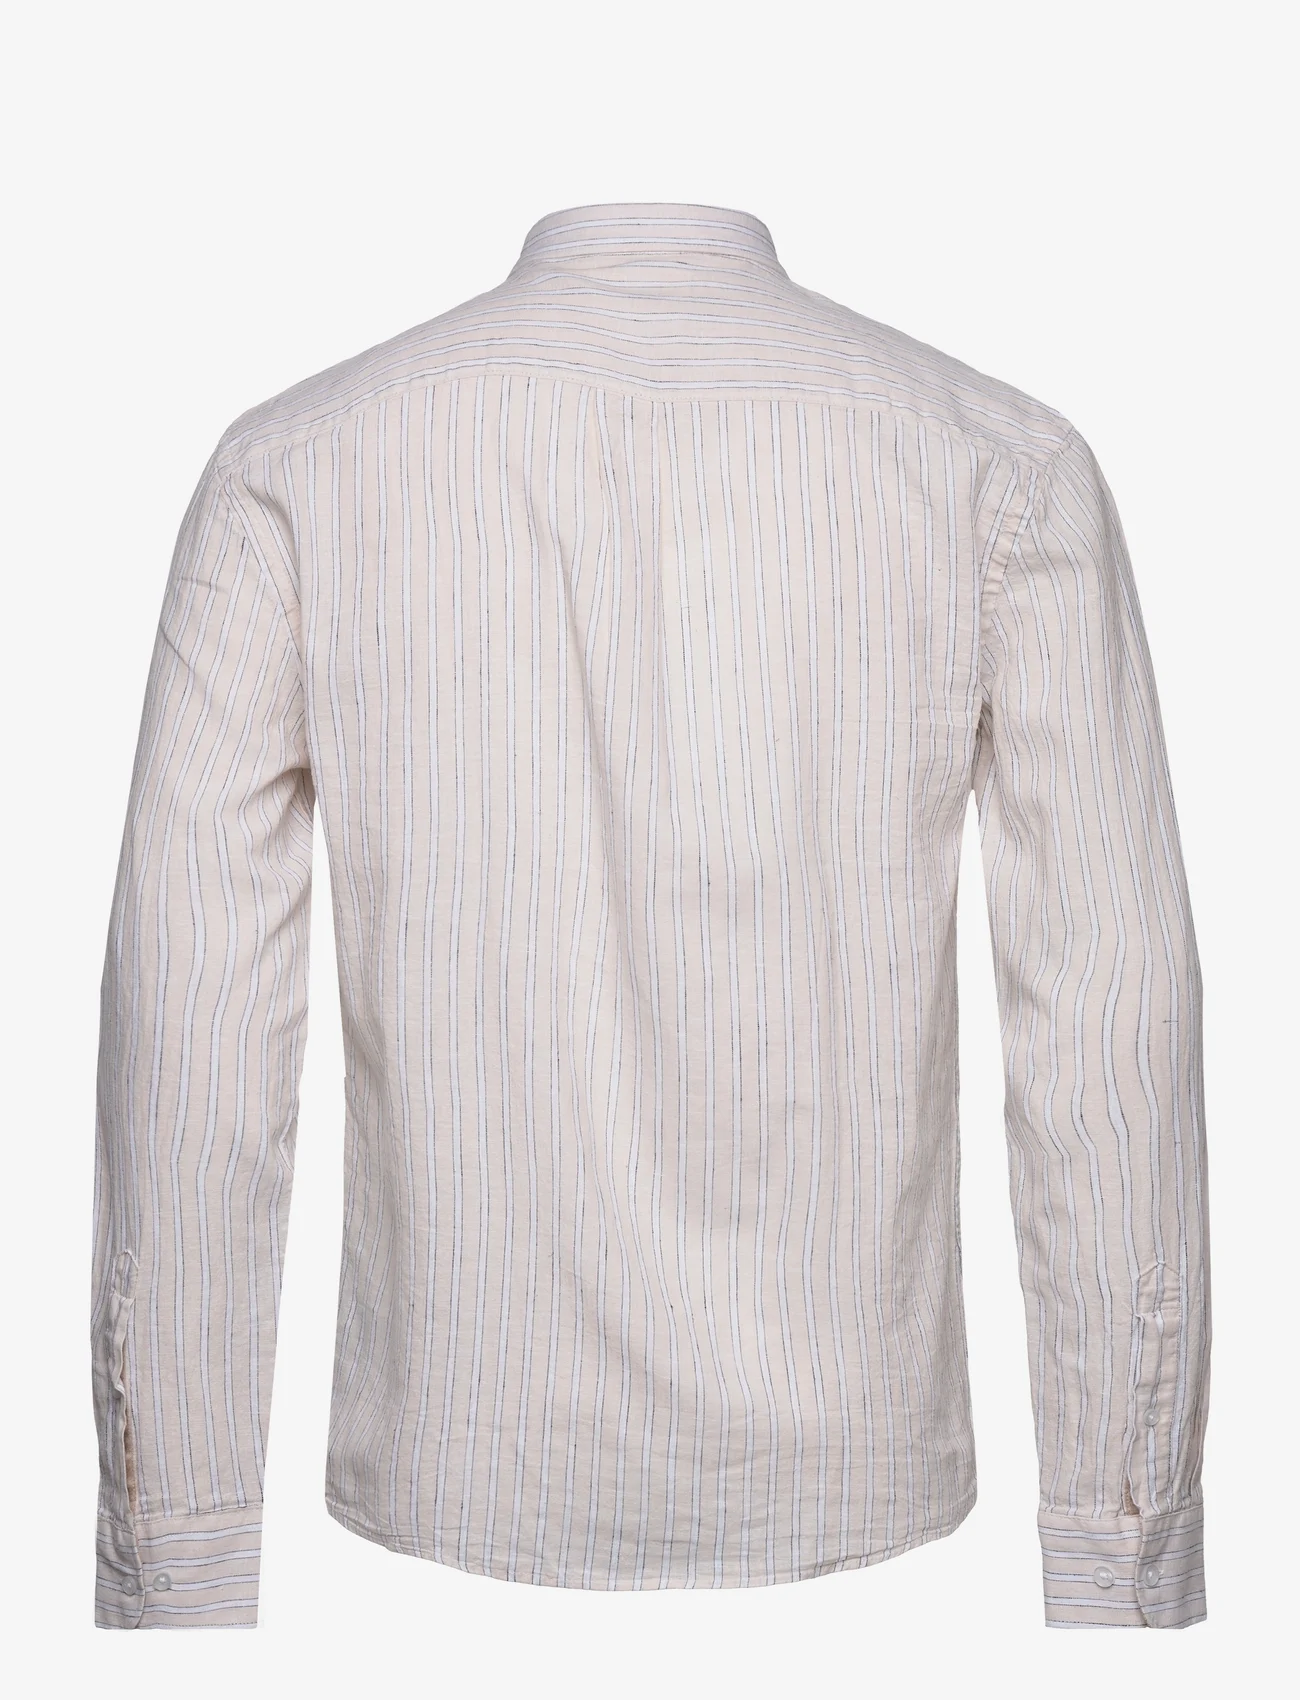 Lindbergh - Striped cotton/linen shirt L/S - nordic style - sand - 1